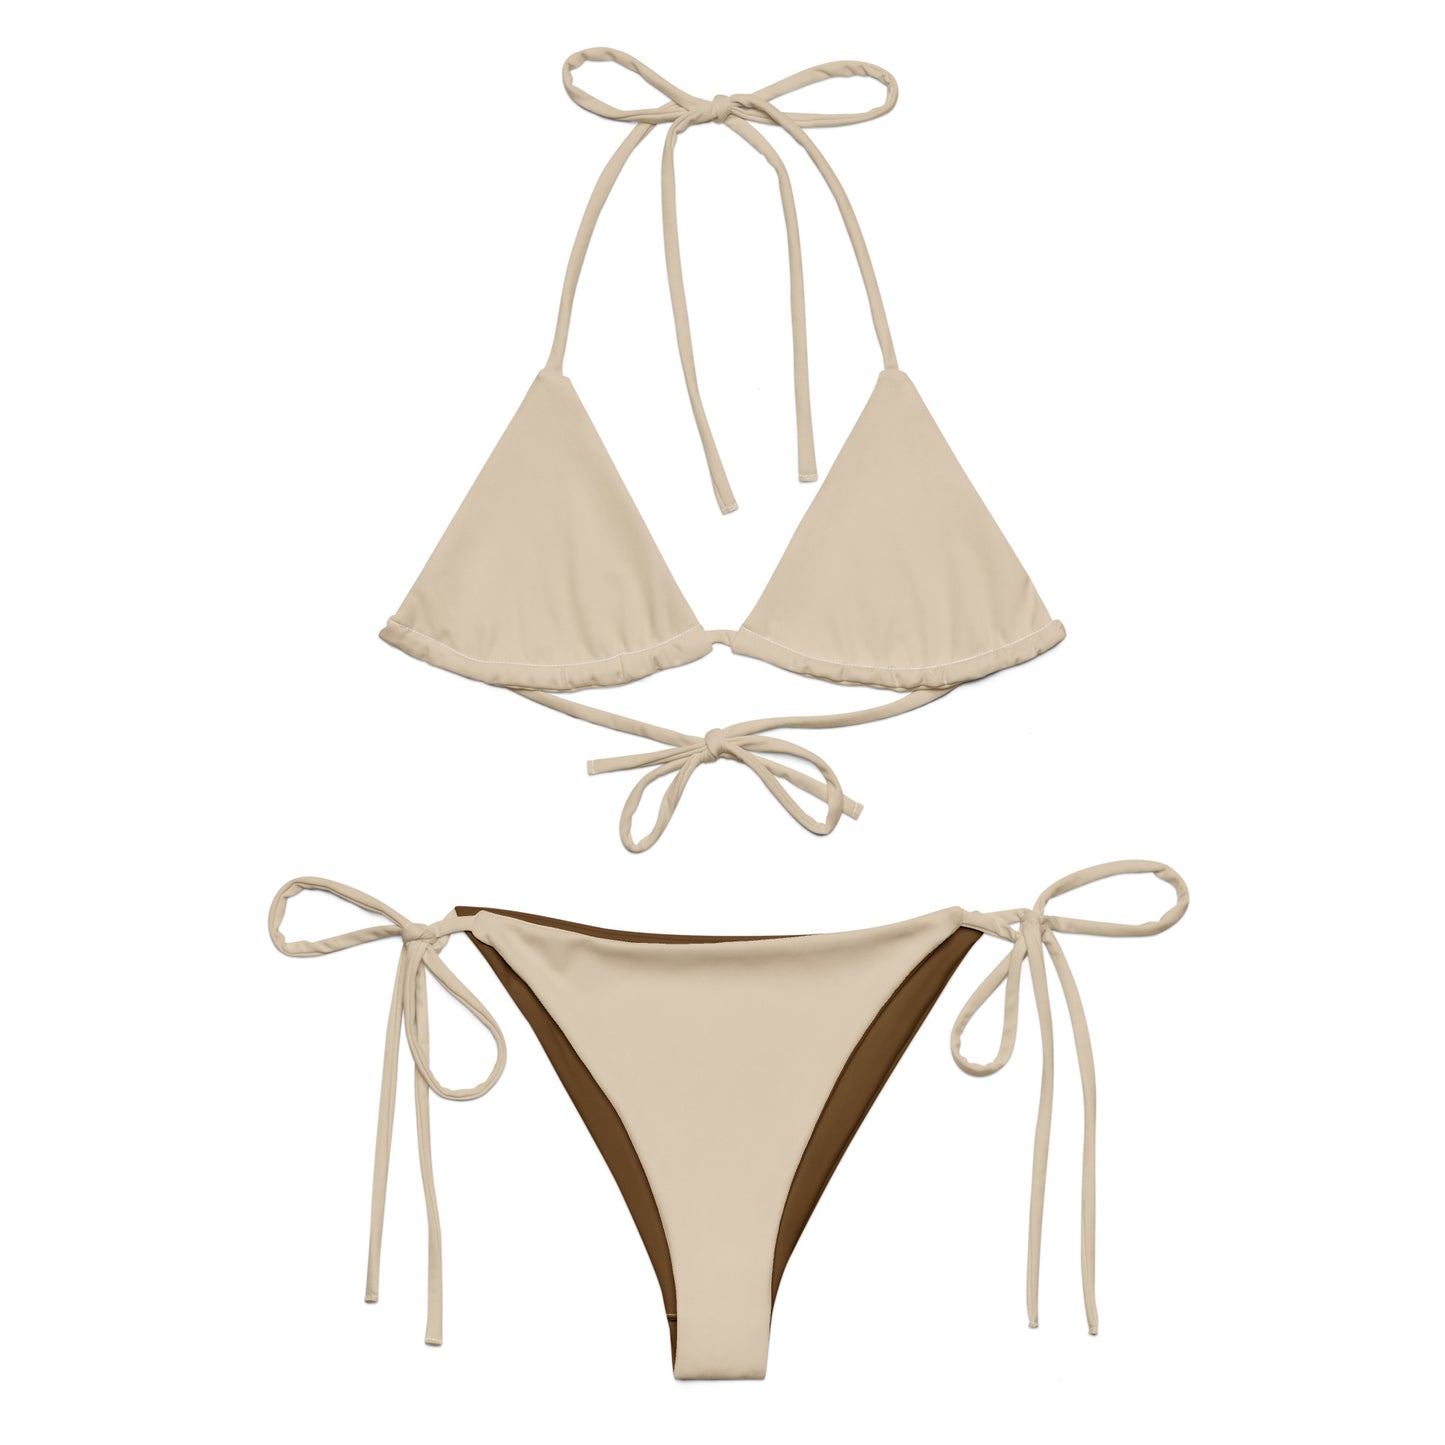 Almond beige Recycled string bikini set eco-friendly triangle bikini double-layered UPF 50+ eco-friendly bikini